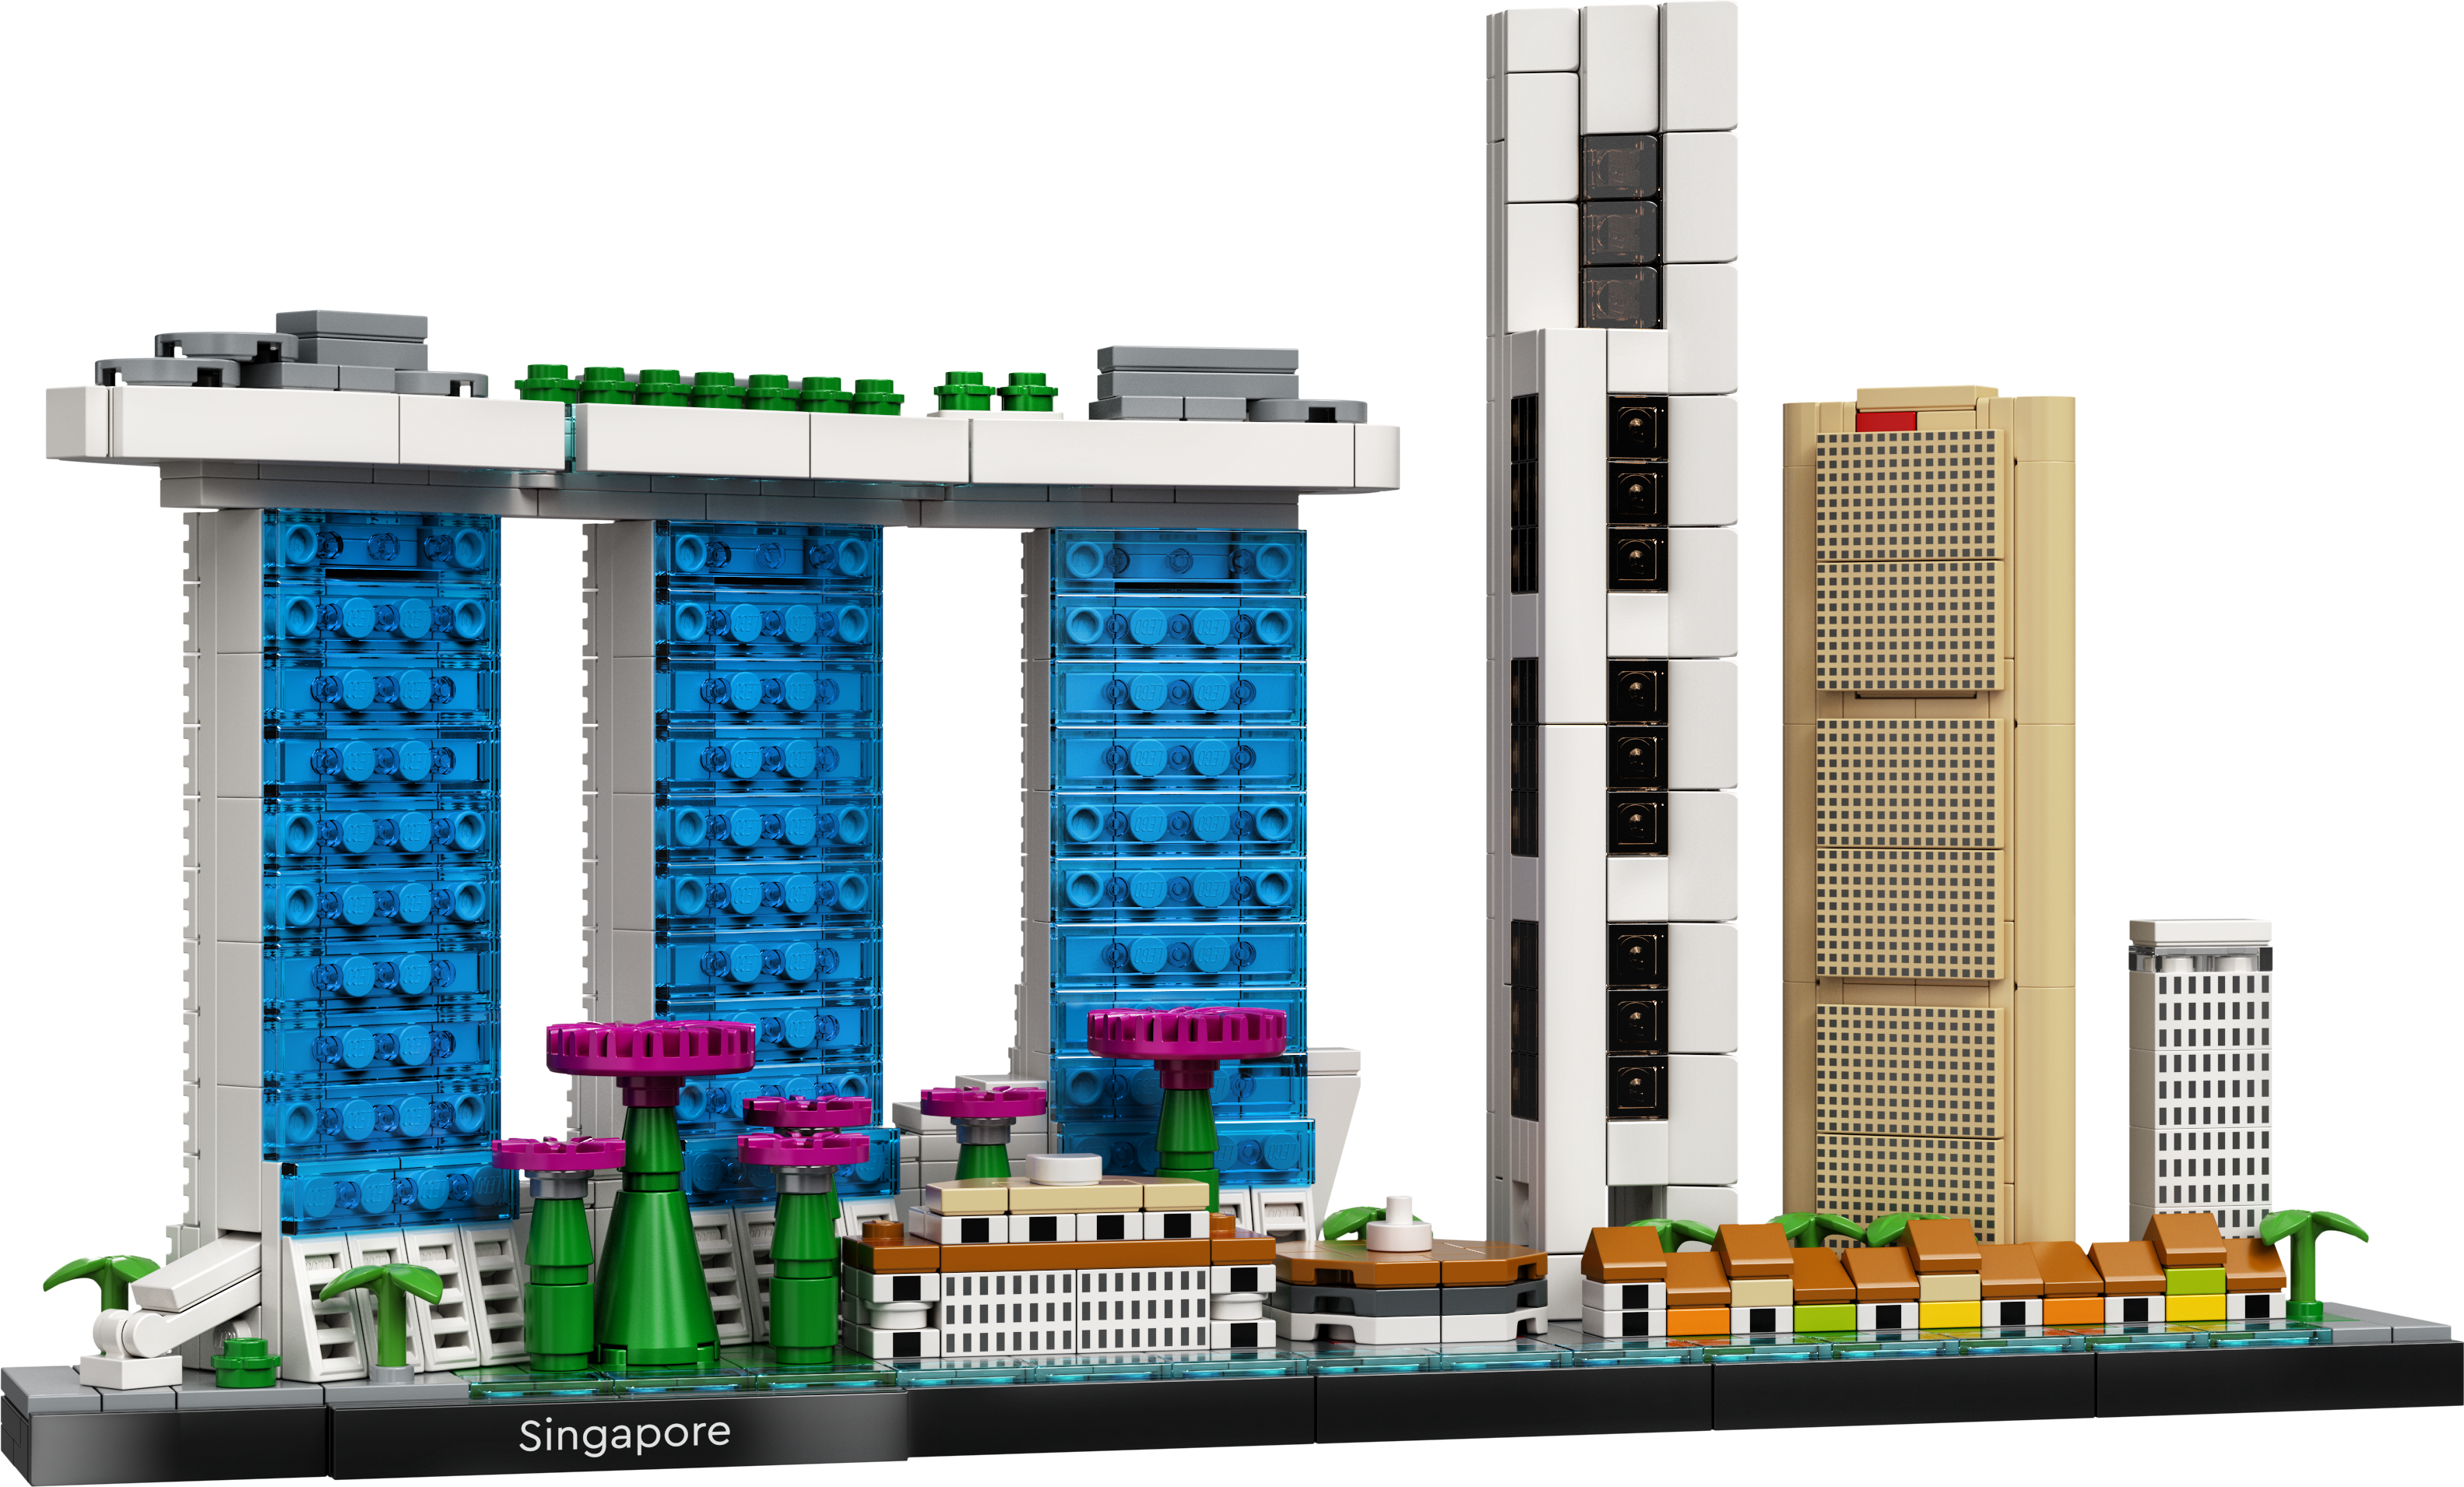 Lego Architecture Singapore a 59.90